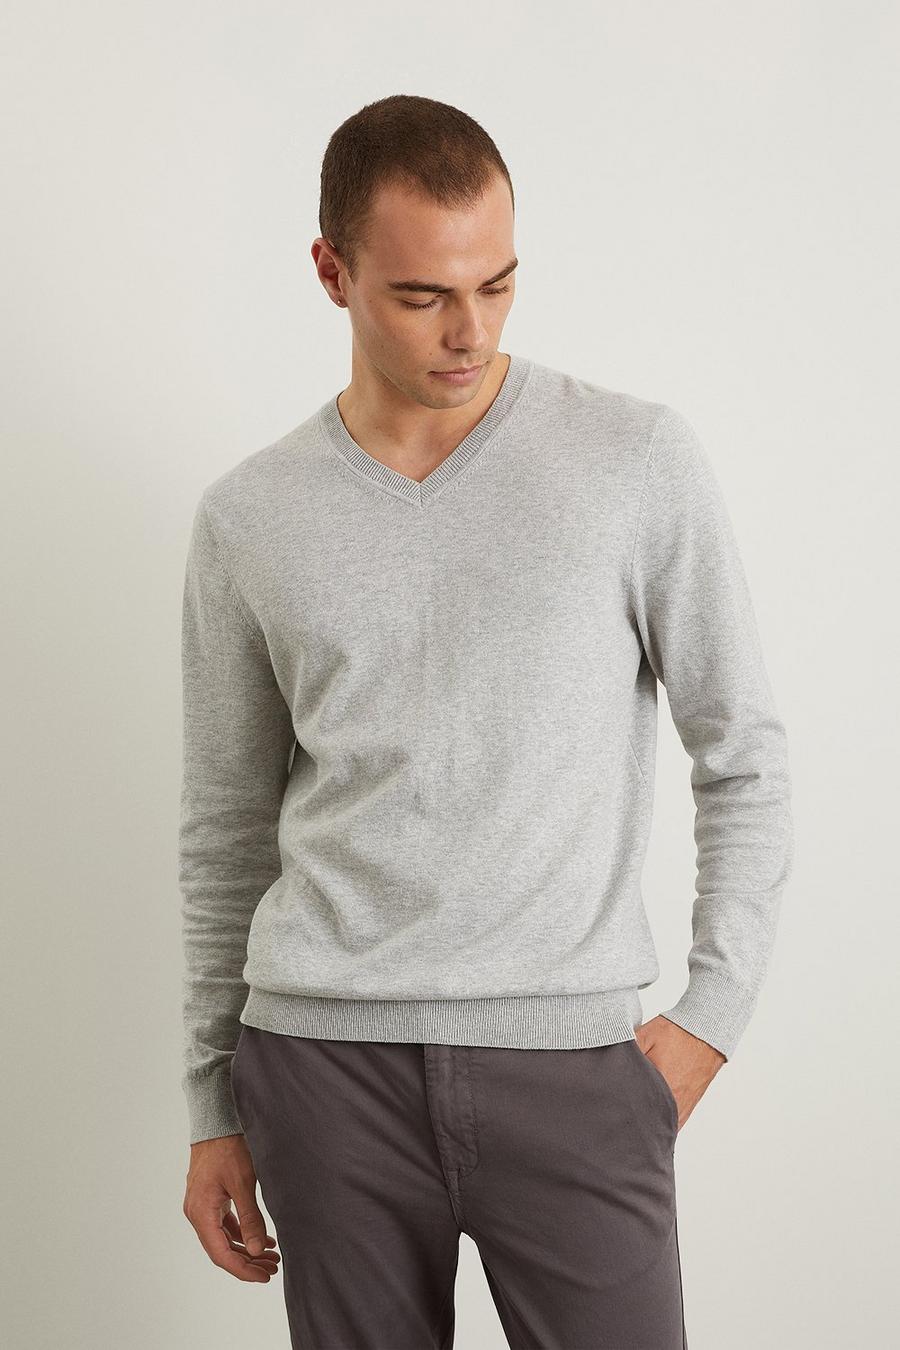 Cotton Rich Light Grey V-Neck Knitted Jumper